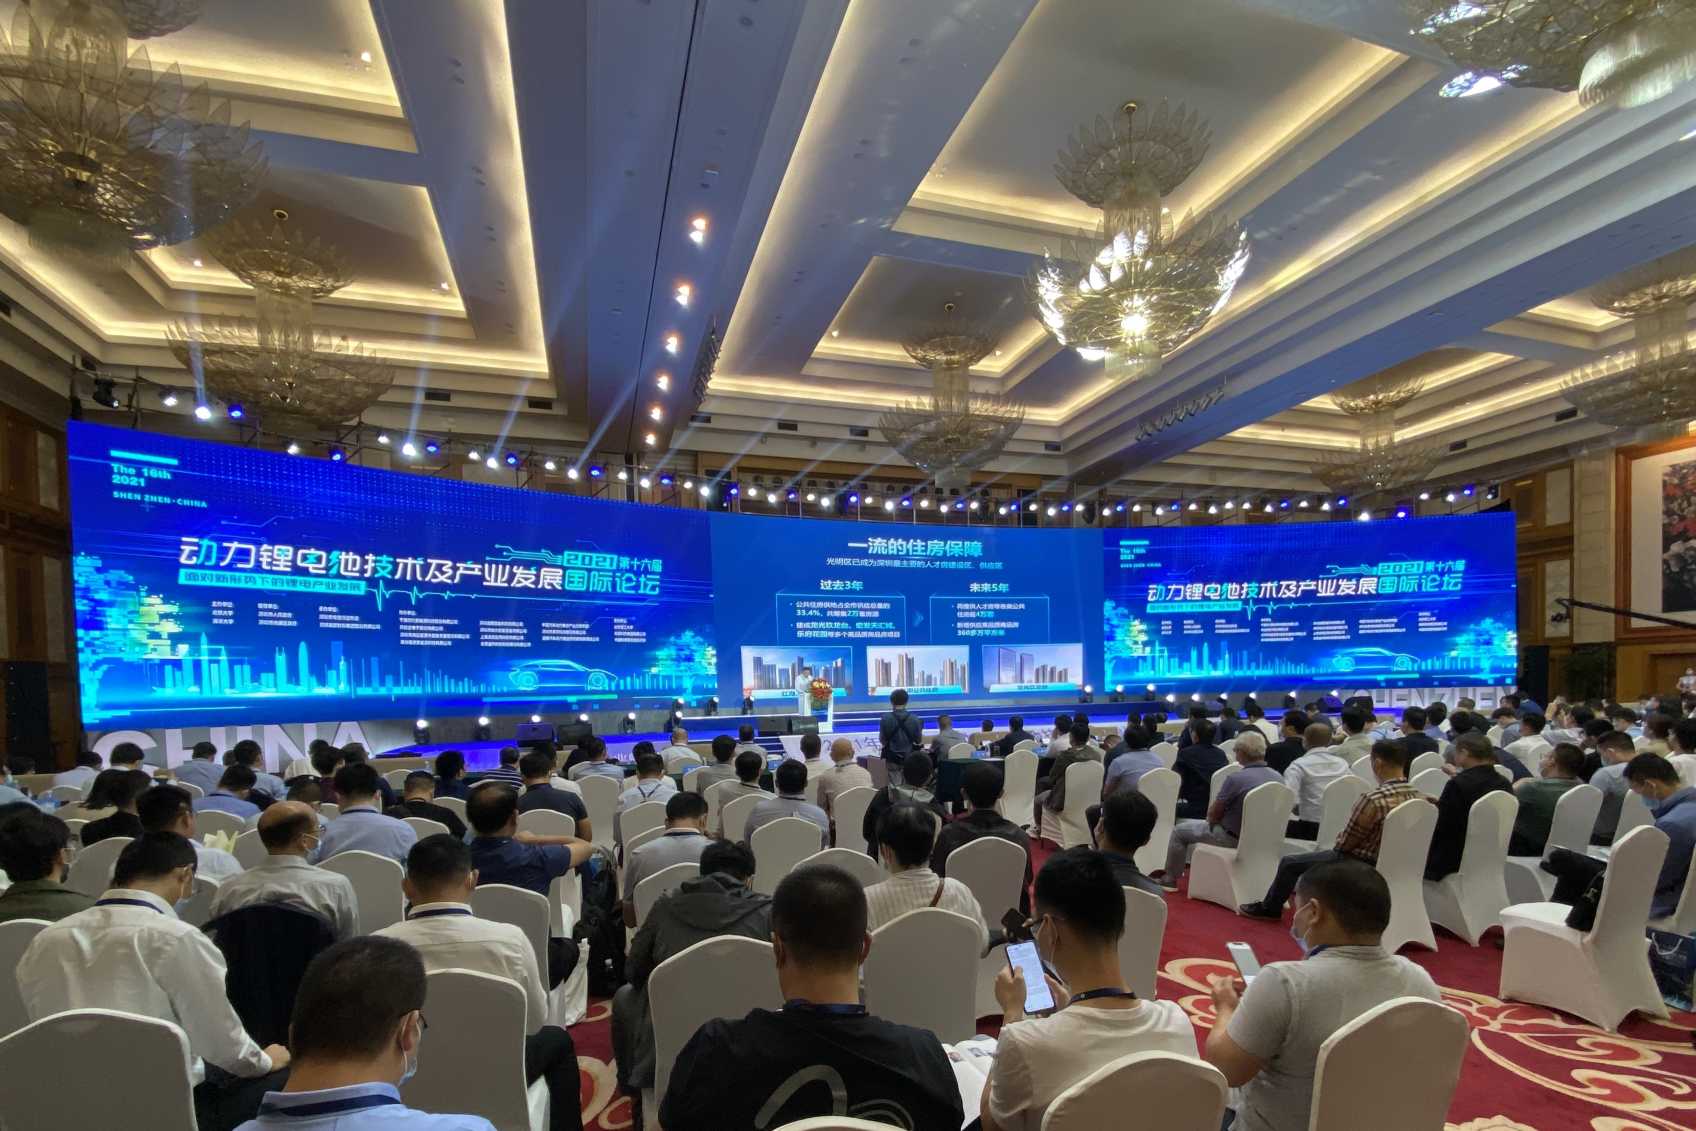 2021(16th) International Forum on Battery Technology & Industrial Development